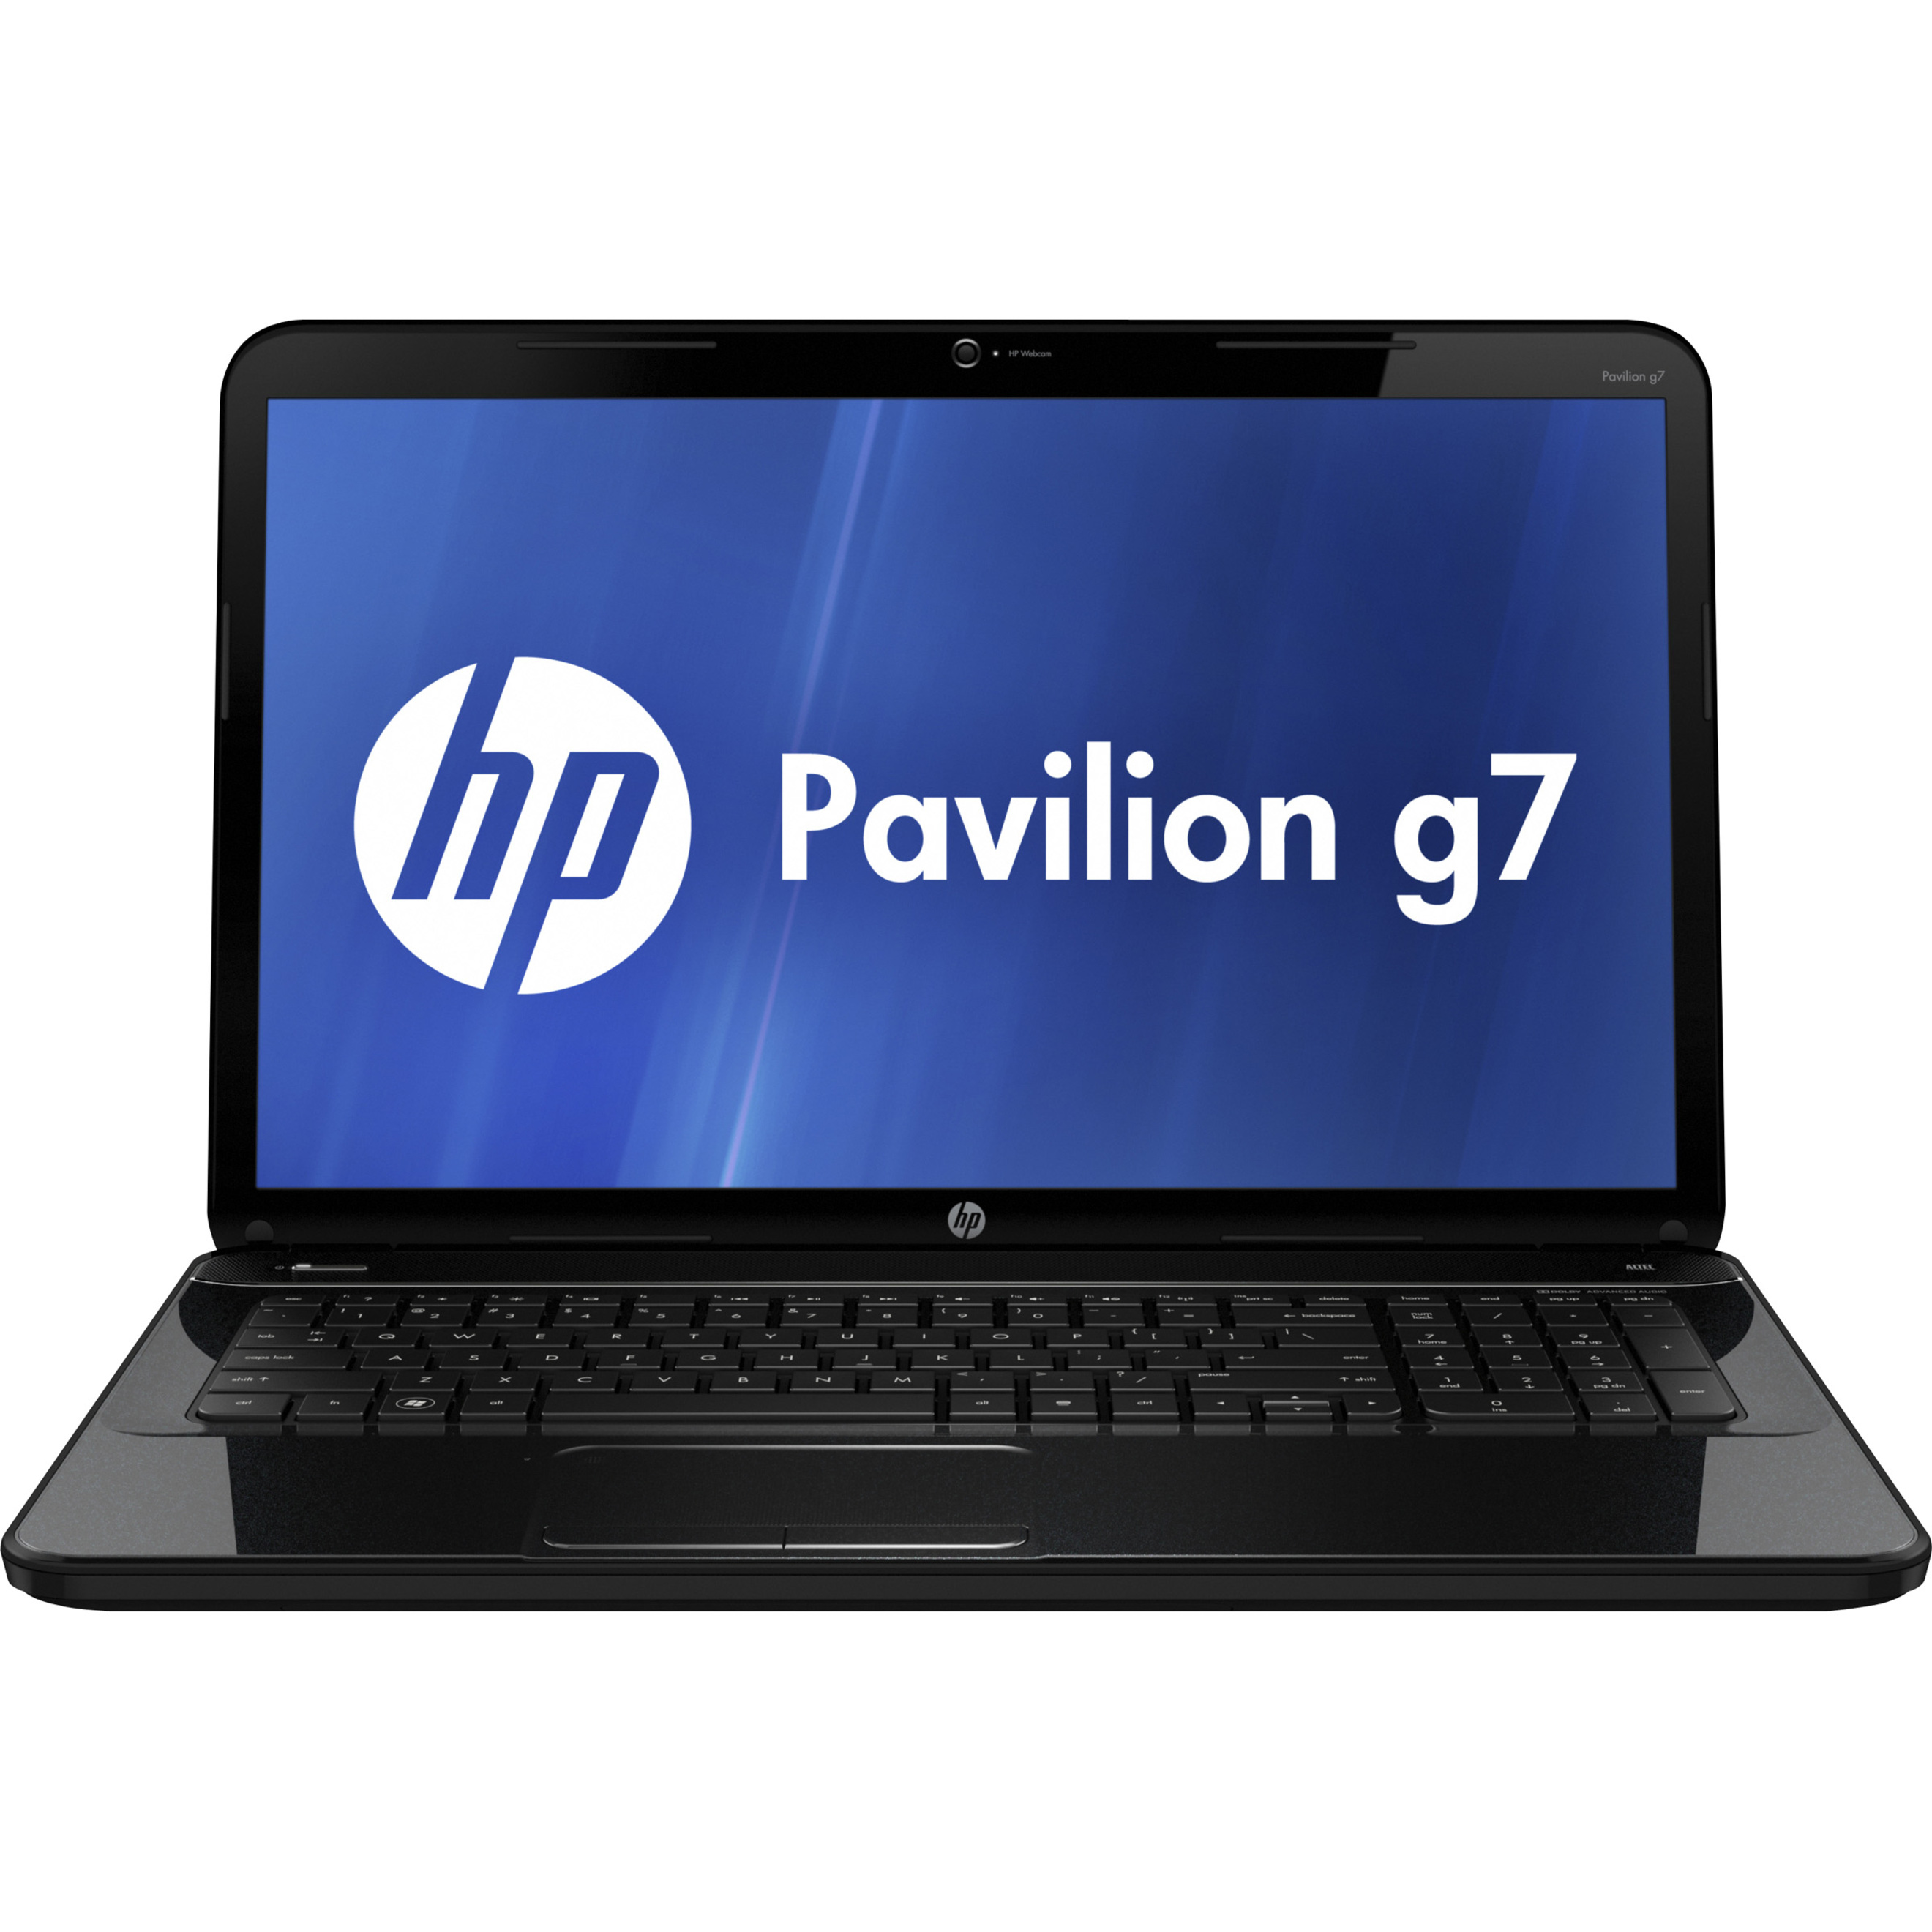 HP Pavilion 17.3" Laptop, AMD A-Series A8-4500M, 500GB HD, DVD Writer, Windows 8, g7-2269wm - image 3 of 6